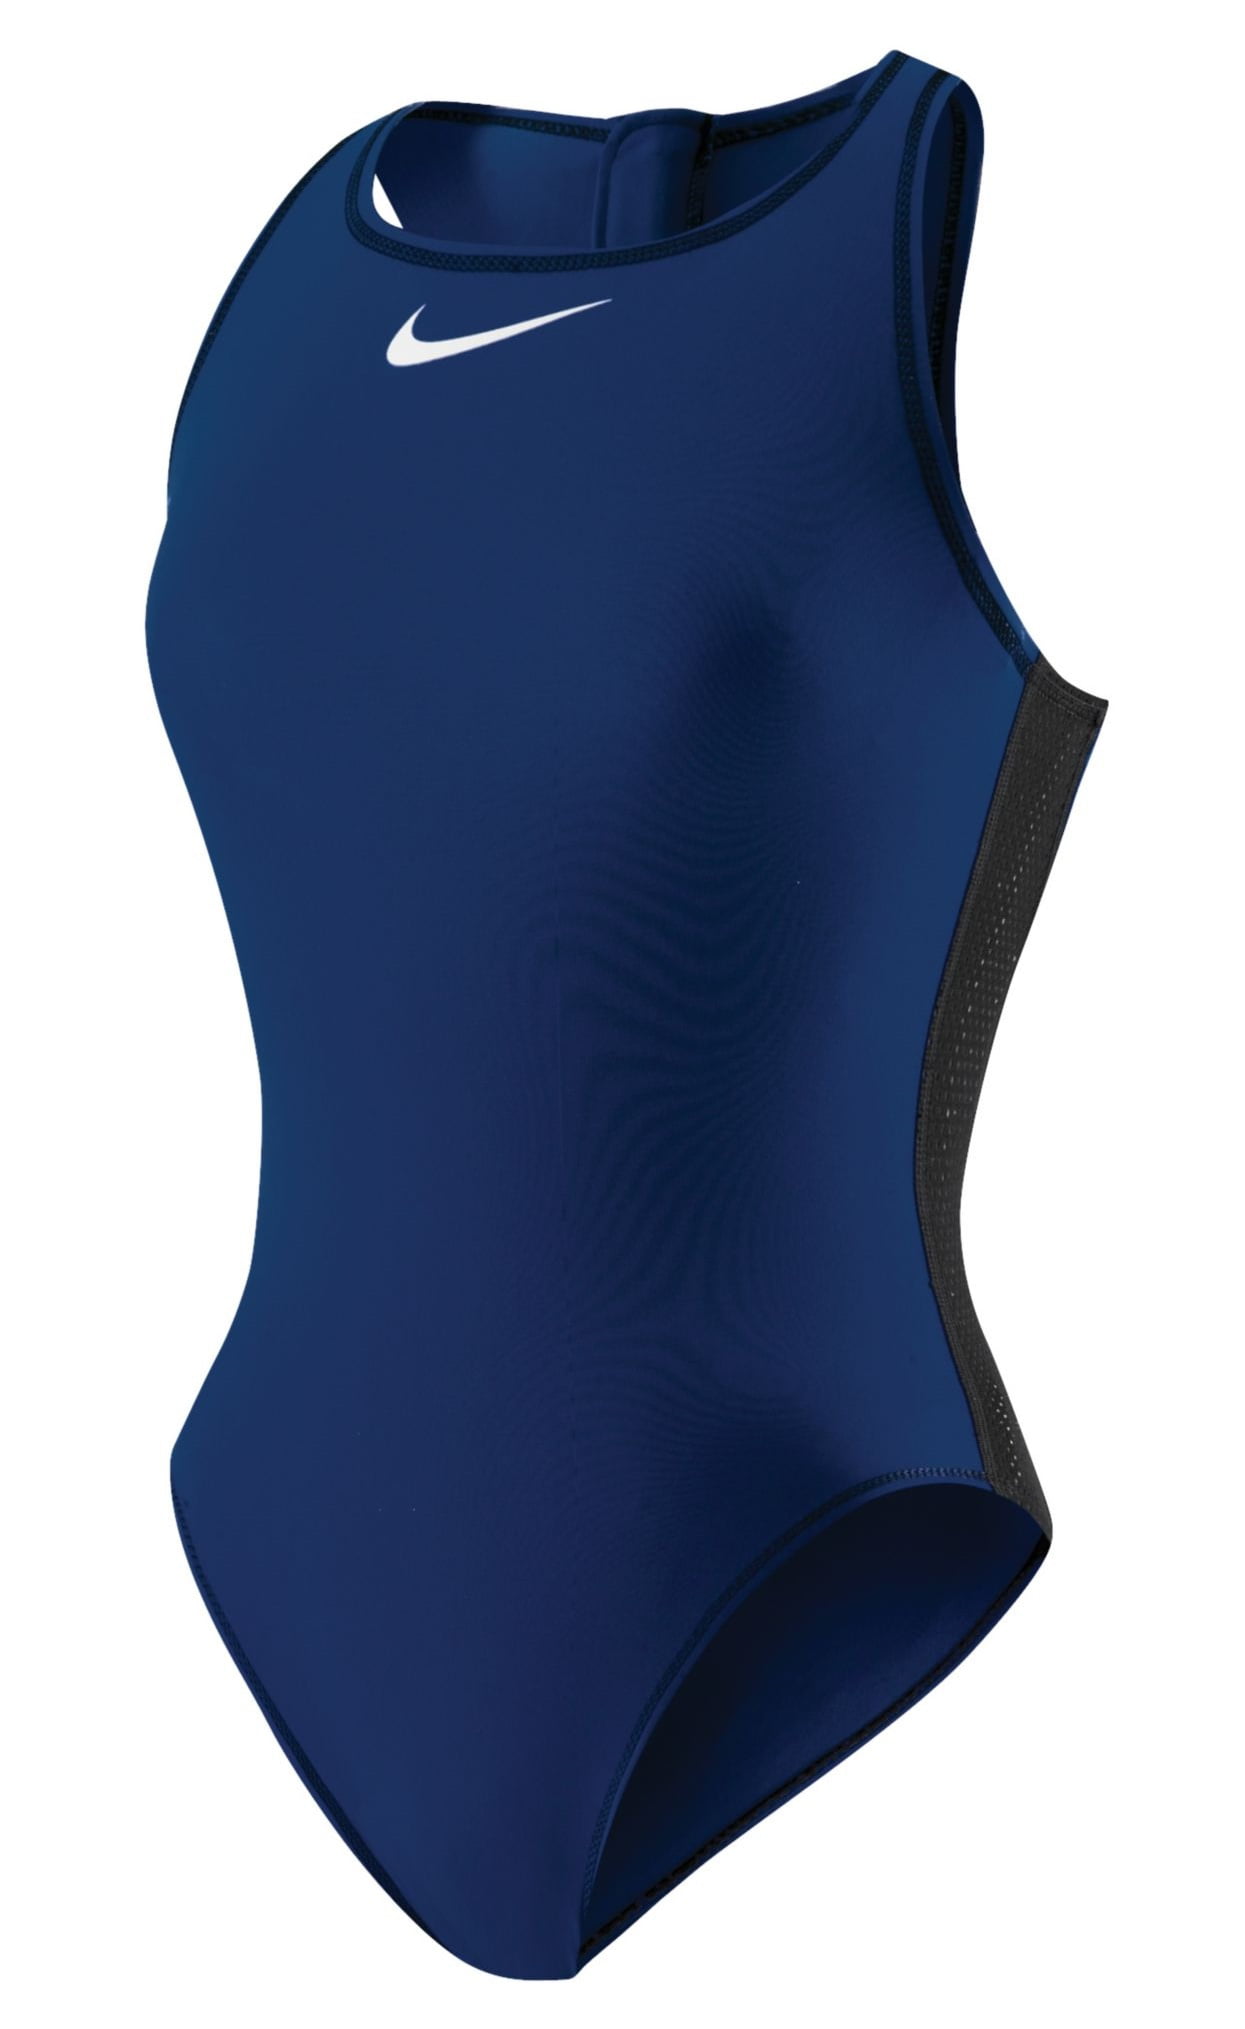 raya empezar Factura Nike Women's Solid Water Polo Swimsuit - Walmart.com